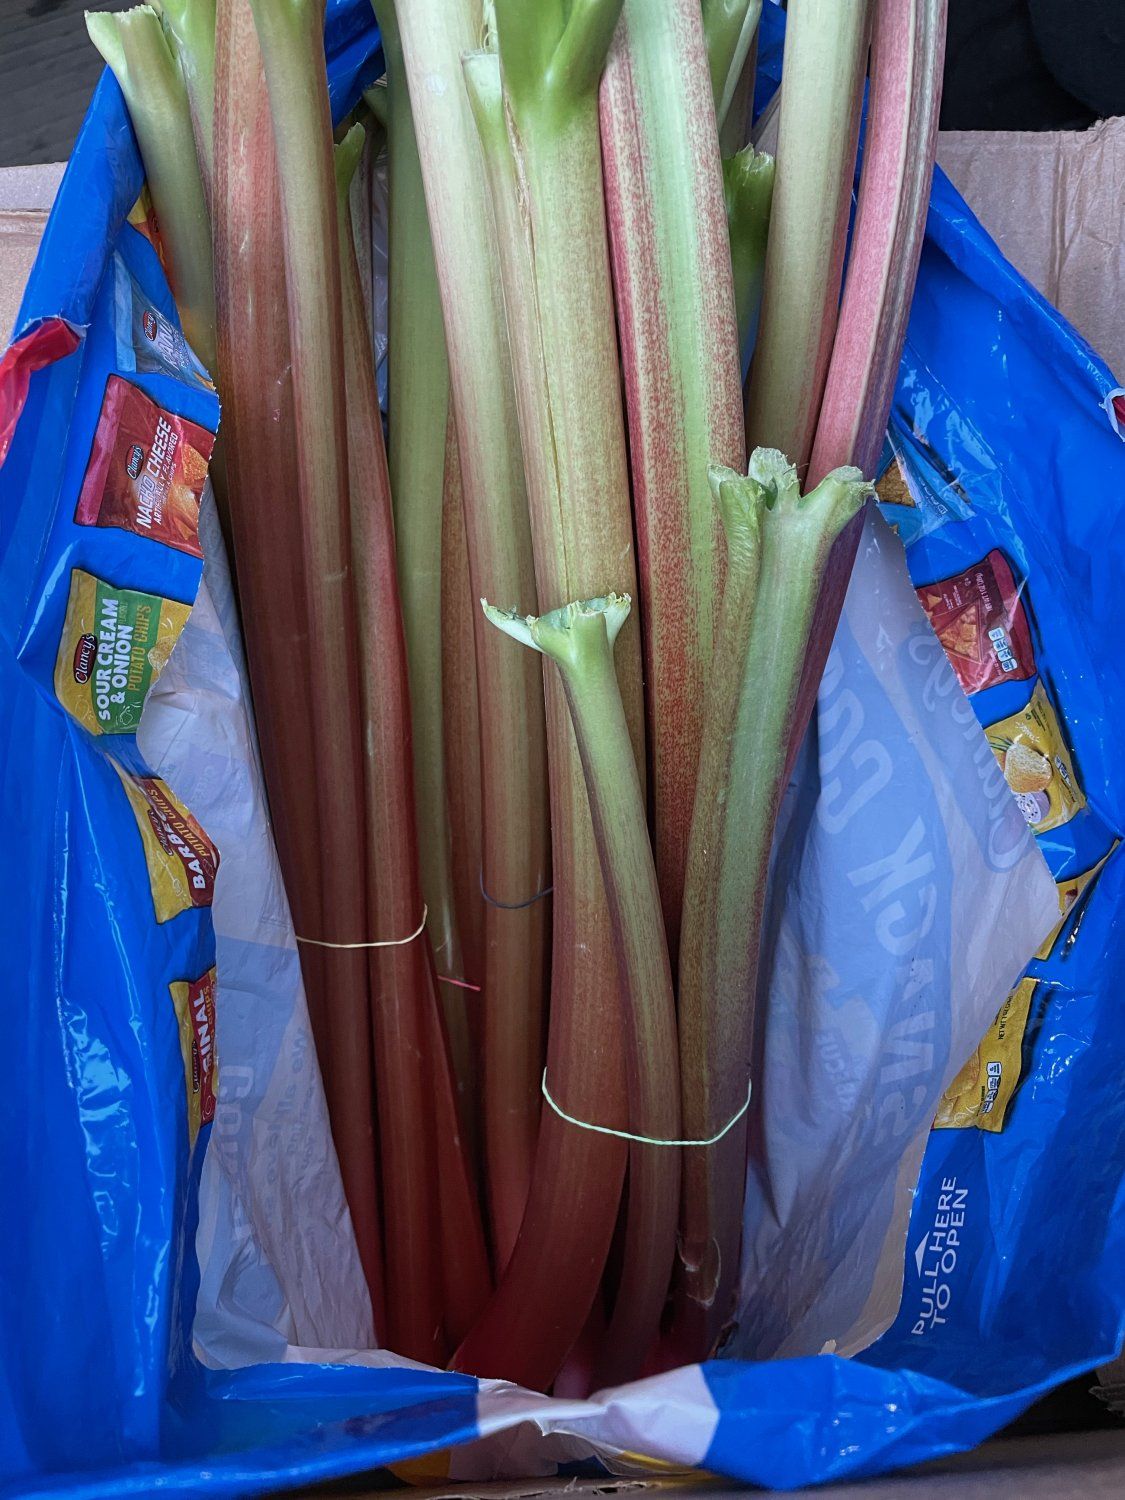 Previous Happening: Rhubarb and Beet Greens Arrive!